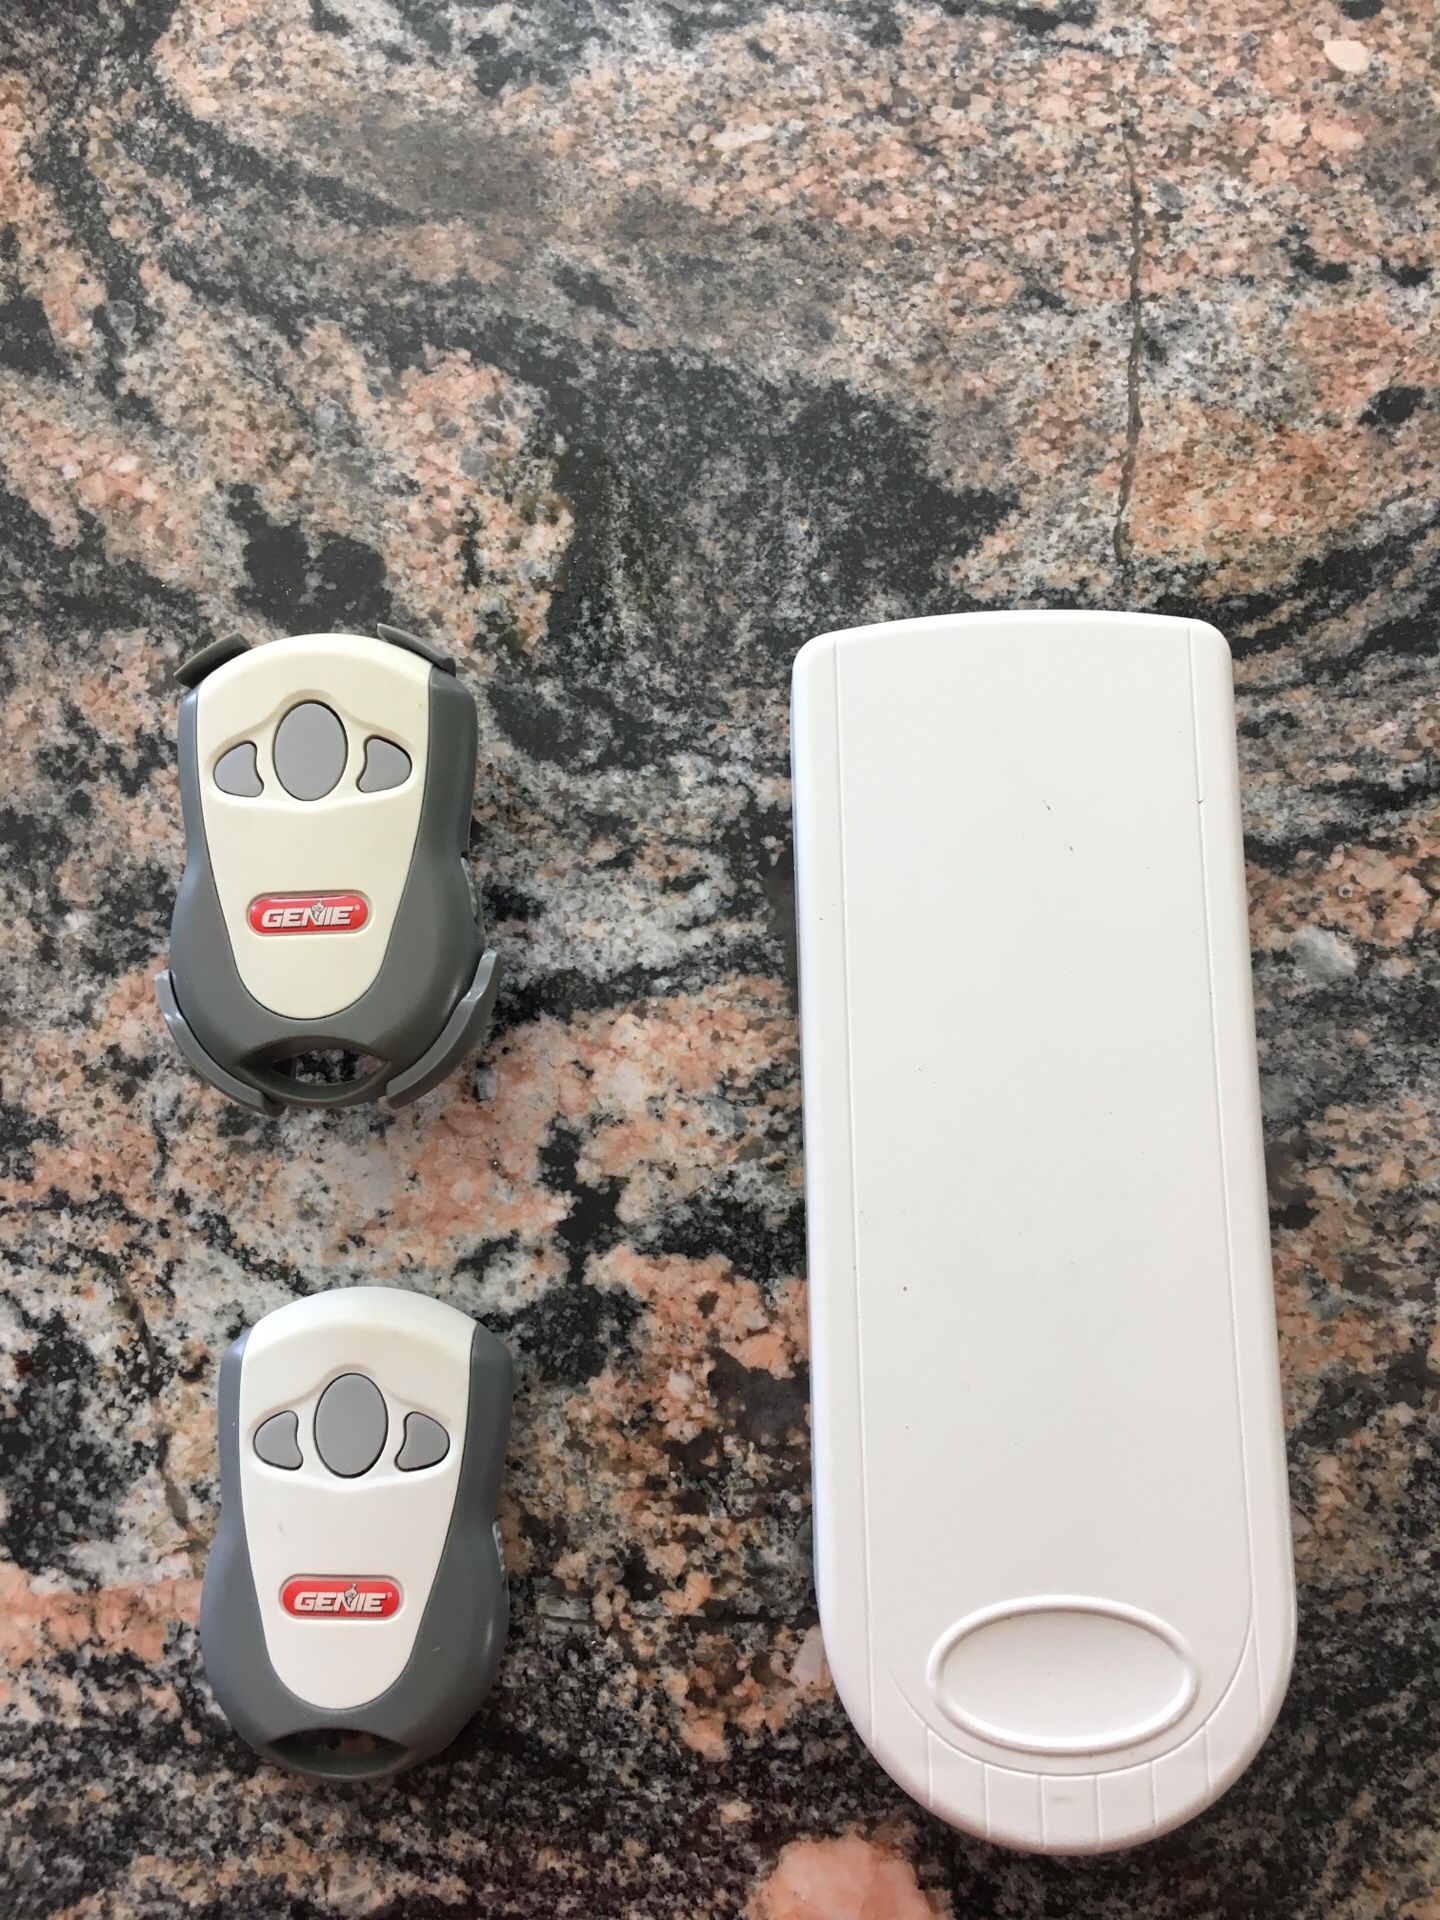 Genie key pad with two remotes